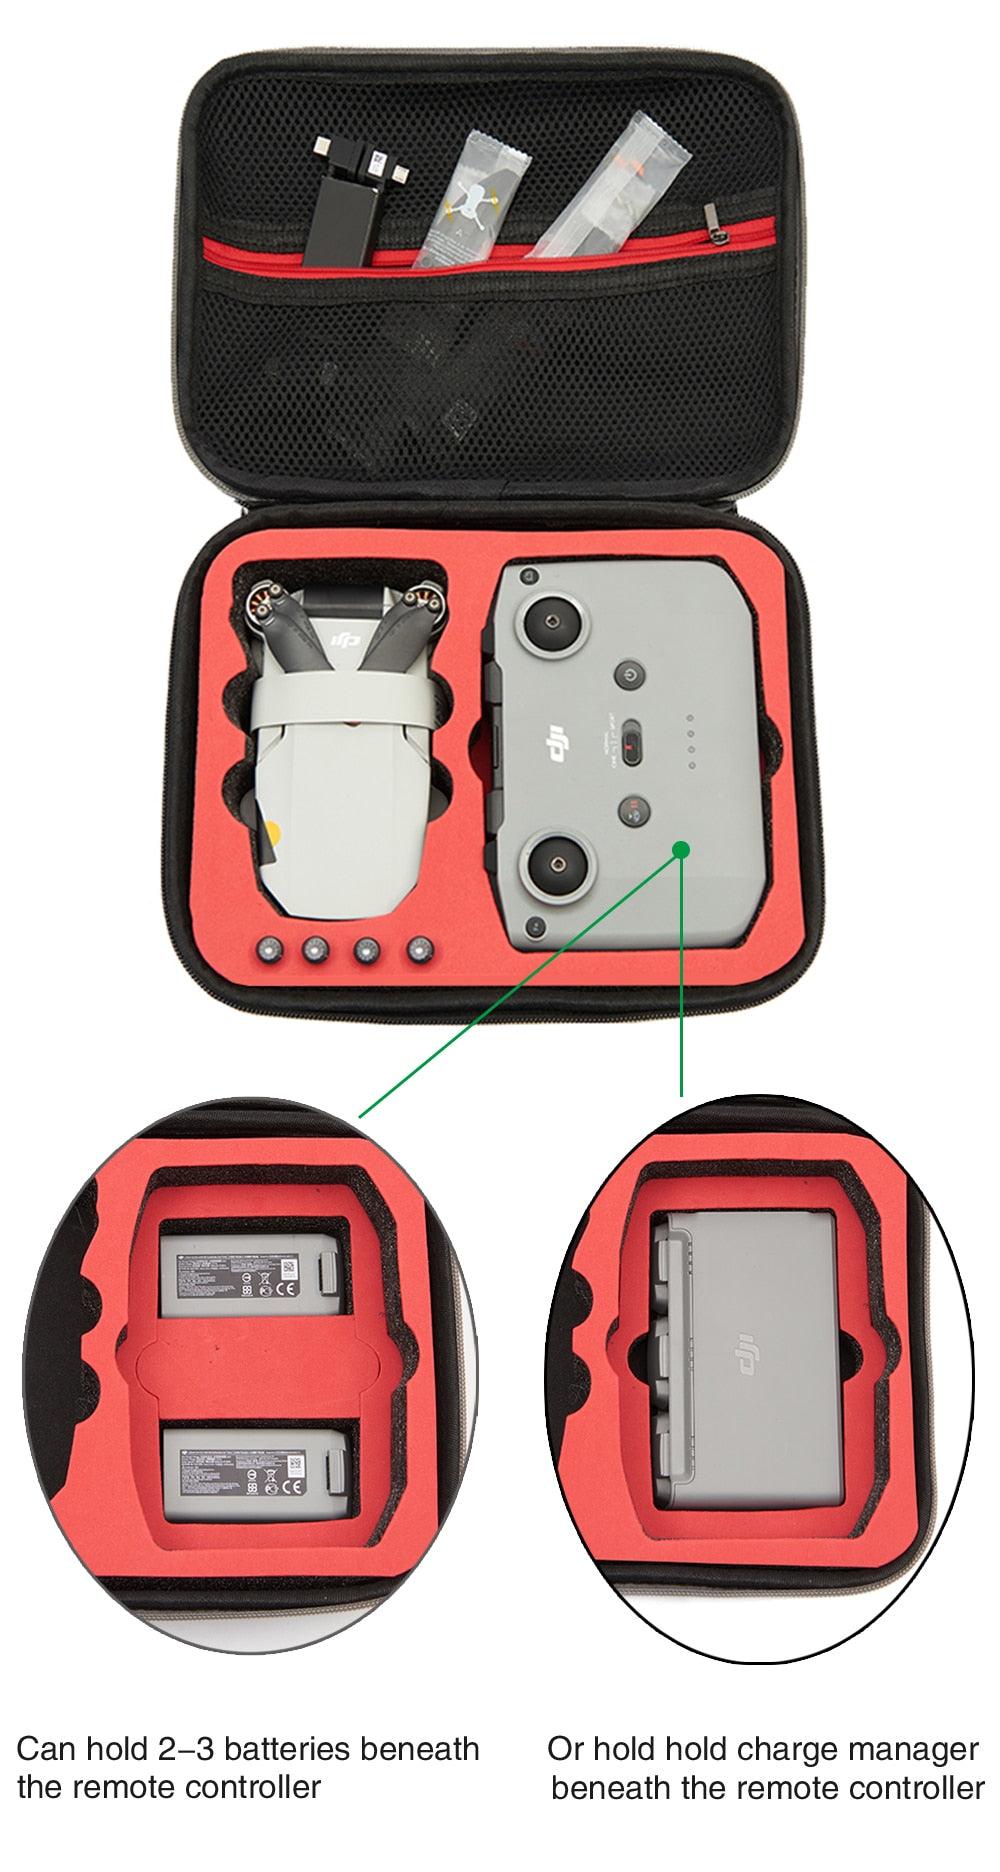 DJI Mini 2 Drone Accessories Portable DJI Mavic Mini 2 Storage Bag Drone Handbag Outdoor Carry Box Case - RCDrone